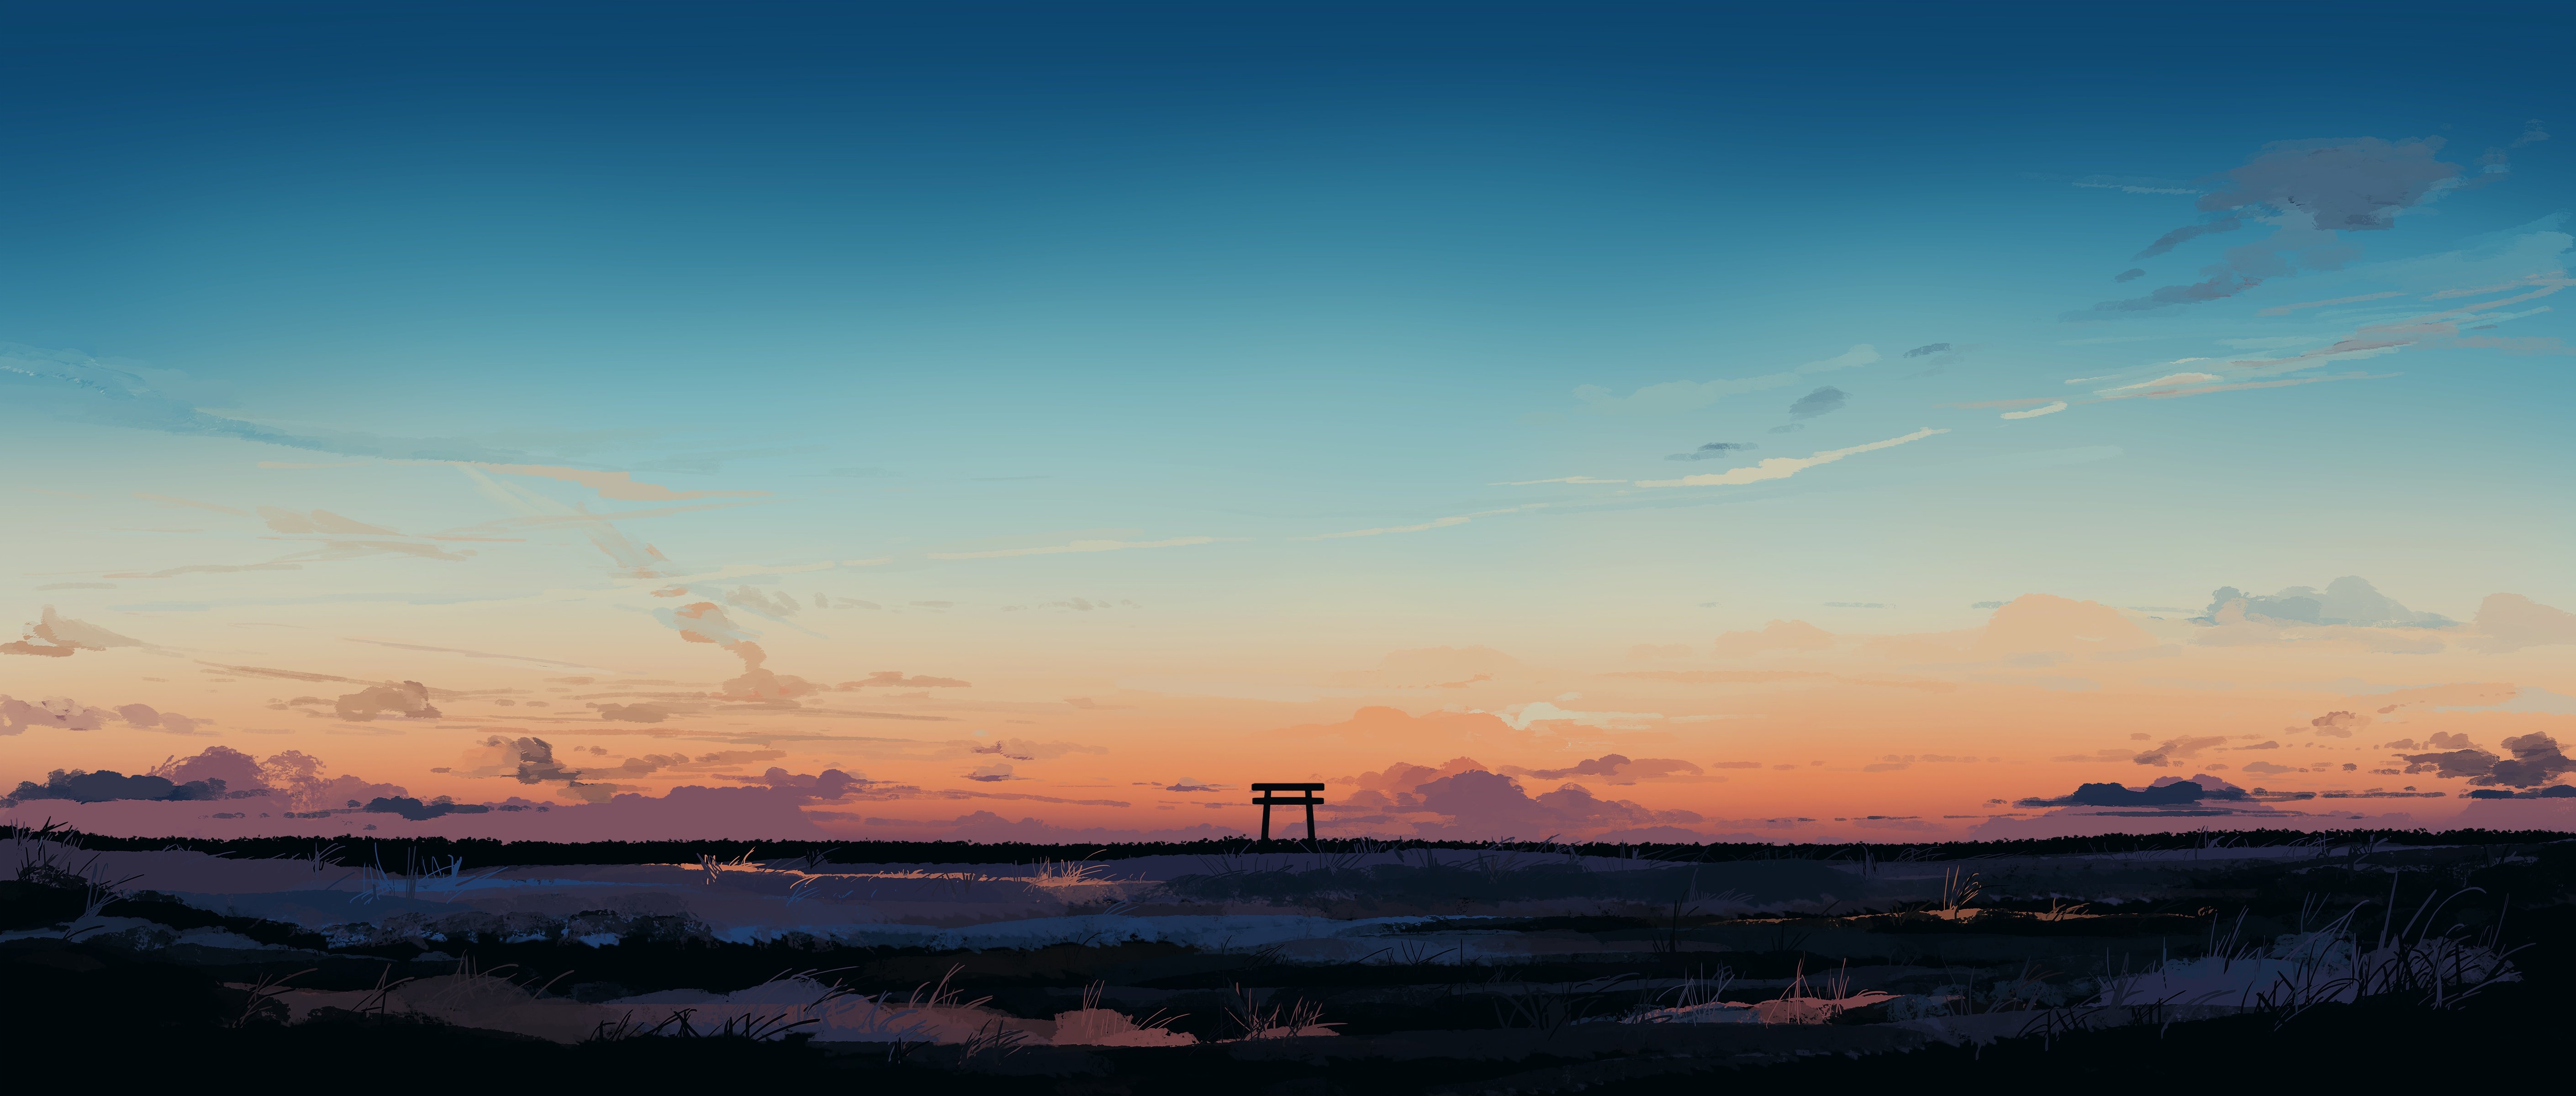 Fondos de pantalla Landscape anime sunset digital art